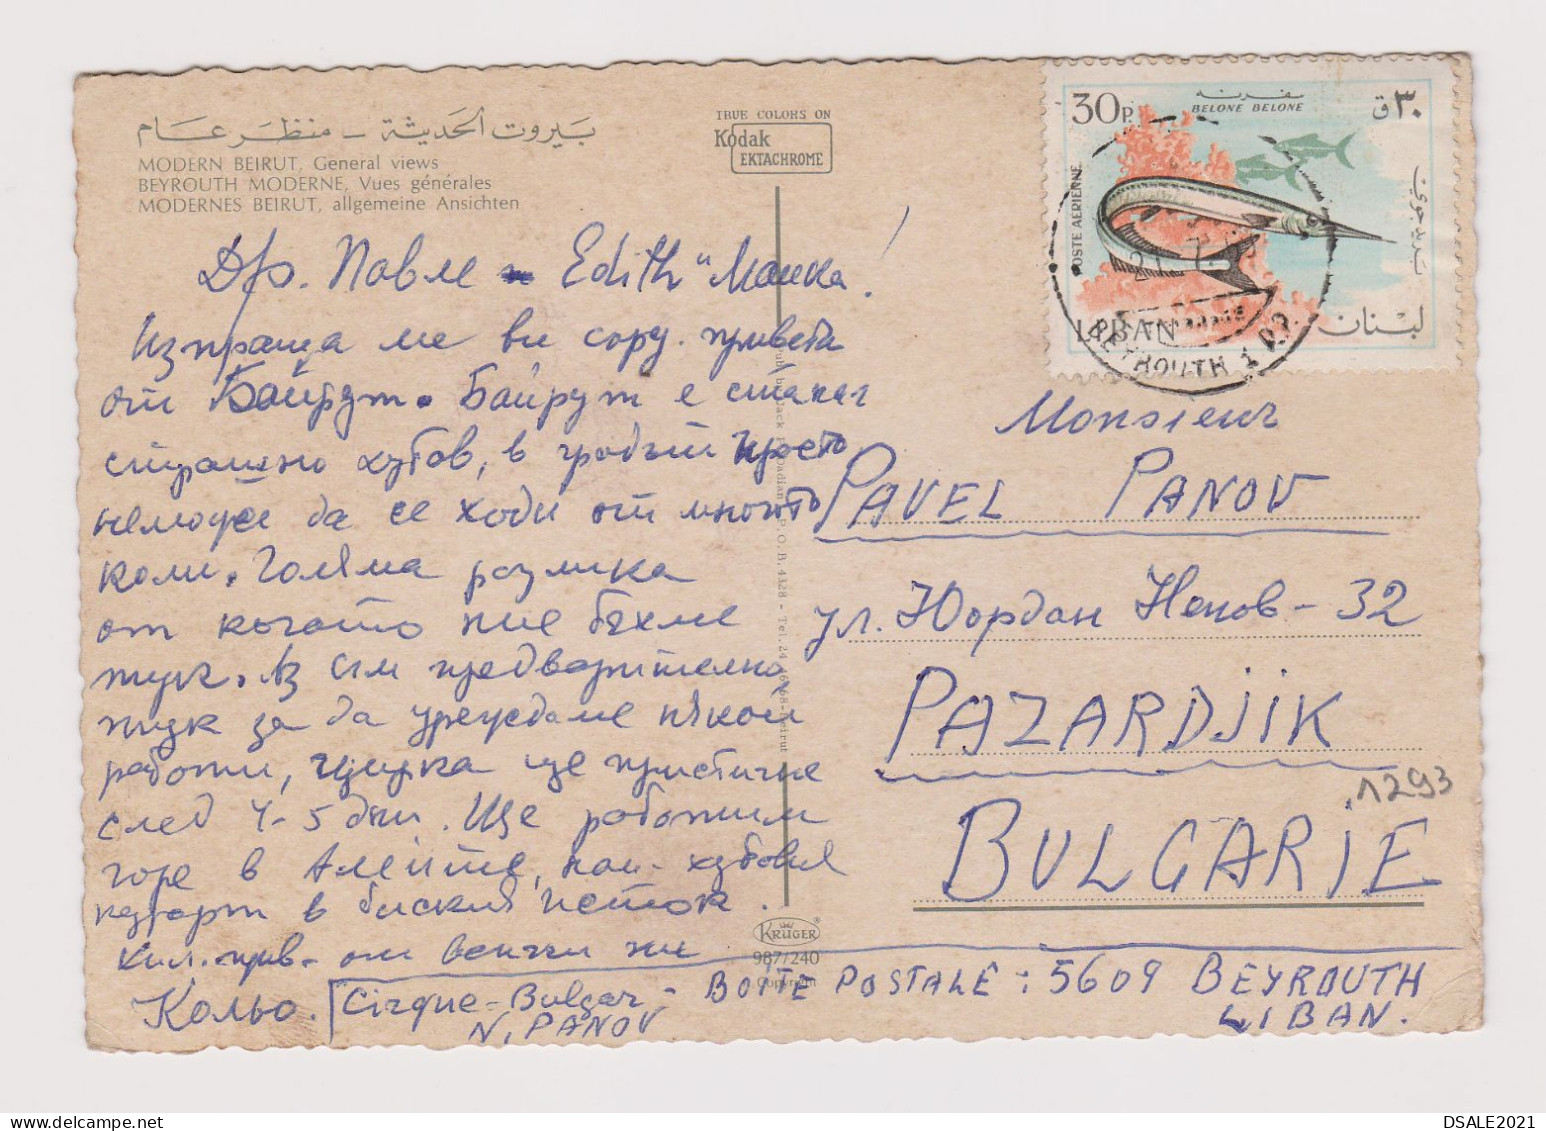 Lebanon BEIRUT Multiple Views, Vintage Photo Postcard W/Topic Stamp Fish 1960s Sent Abroad To Bulgaria (1293) - Libanon